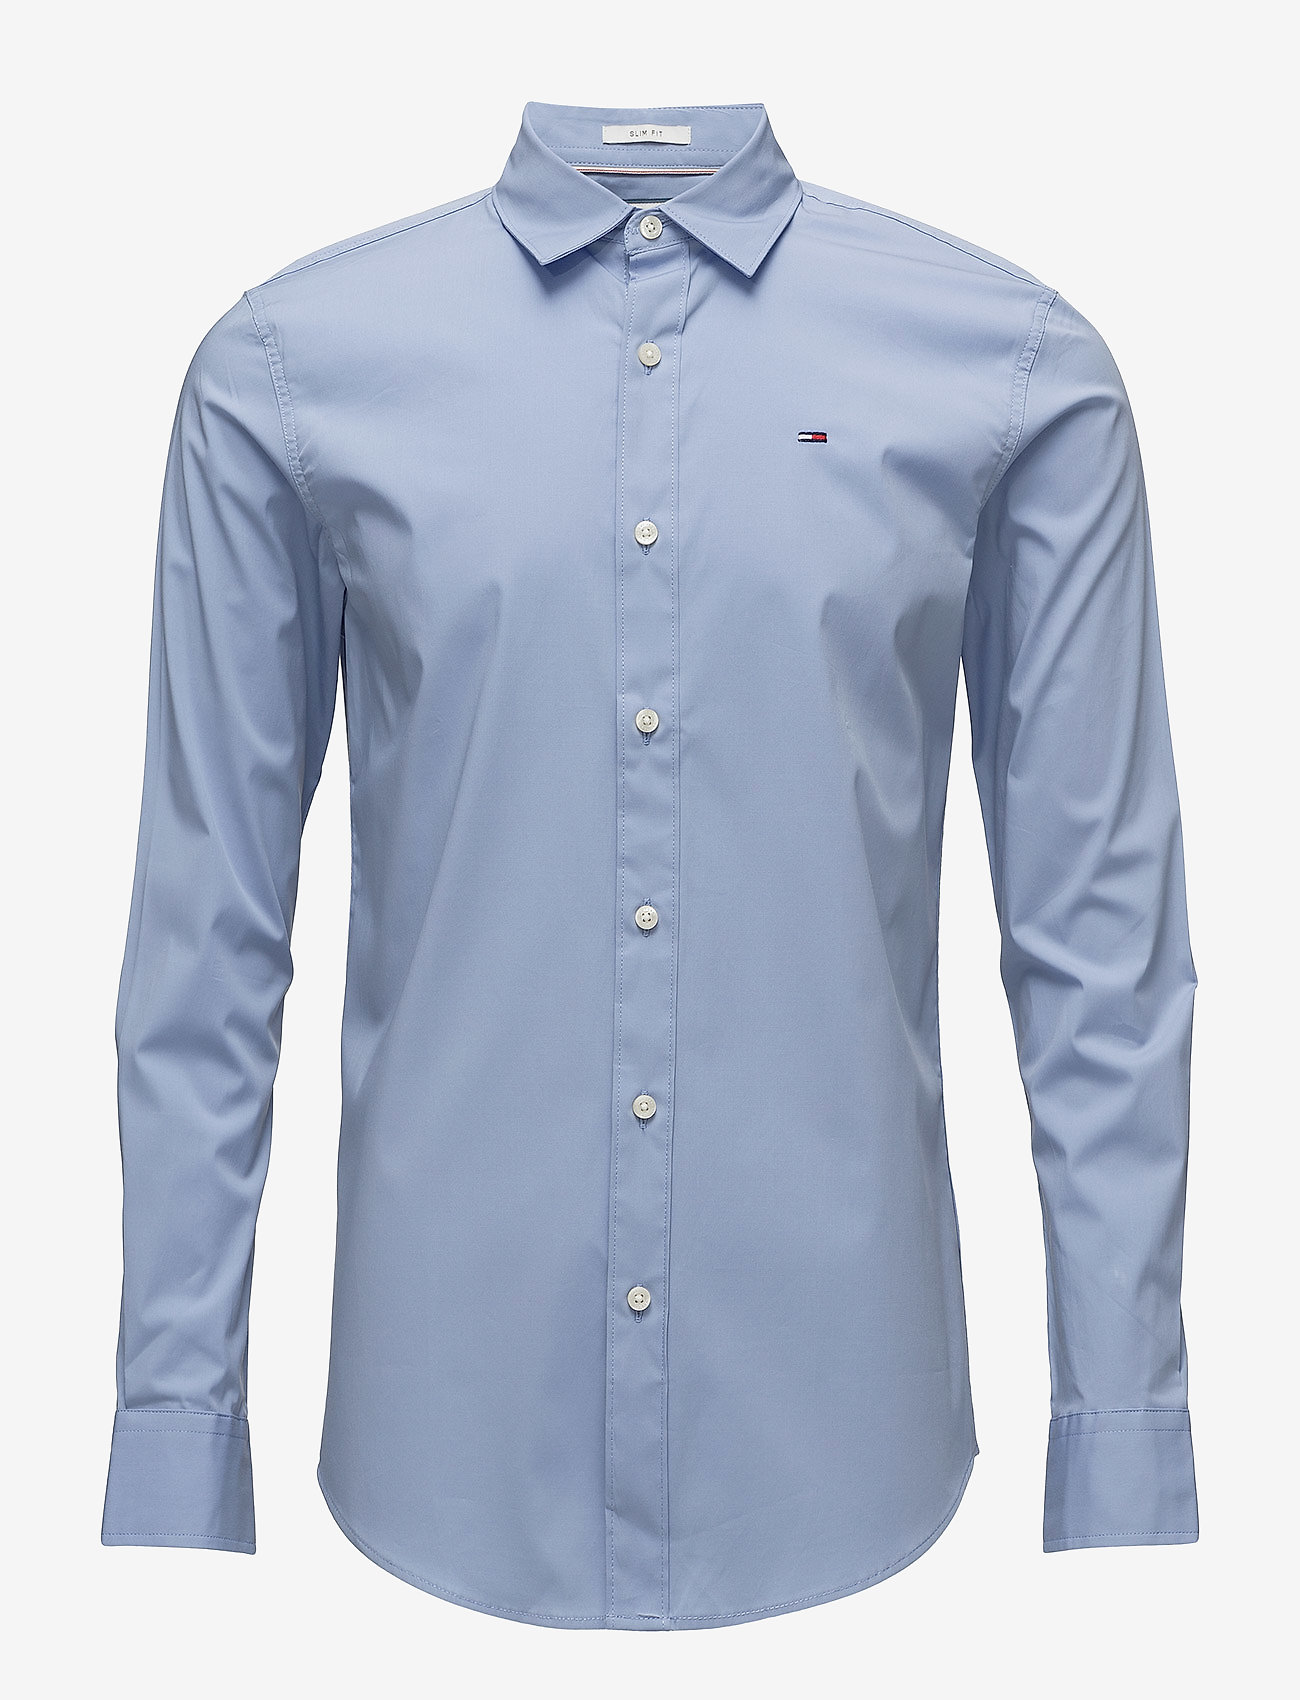 Tommy Jeans - TJM ORIGINAL STRETCH SHIRT - business shirts - lavender lustre - 0